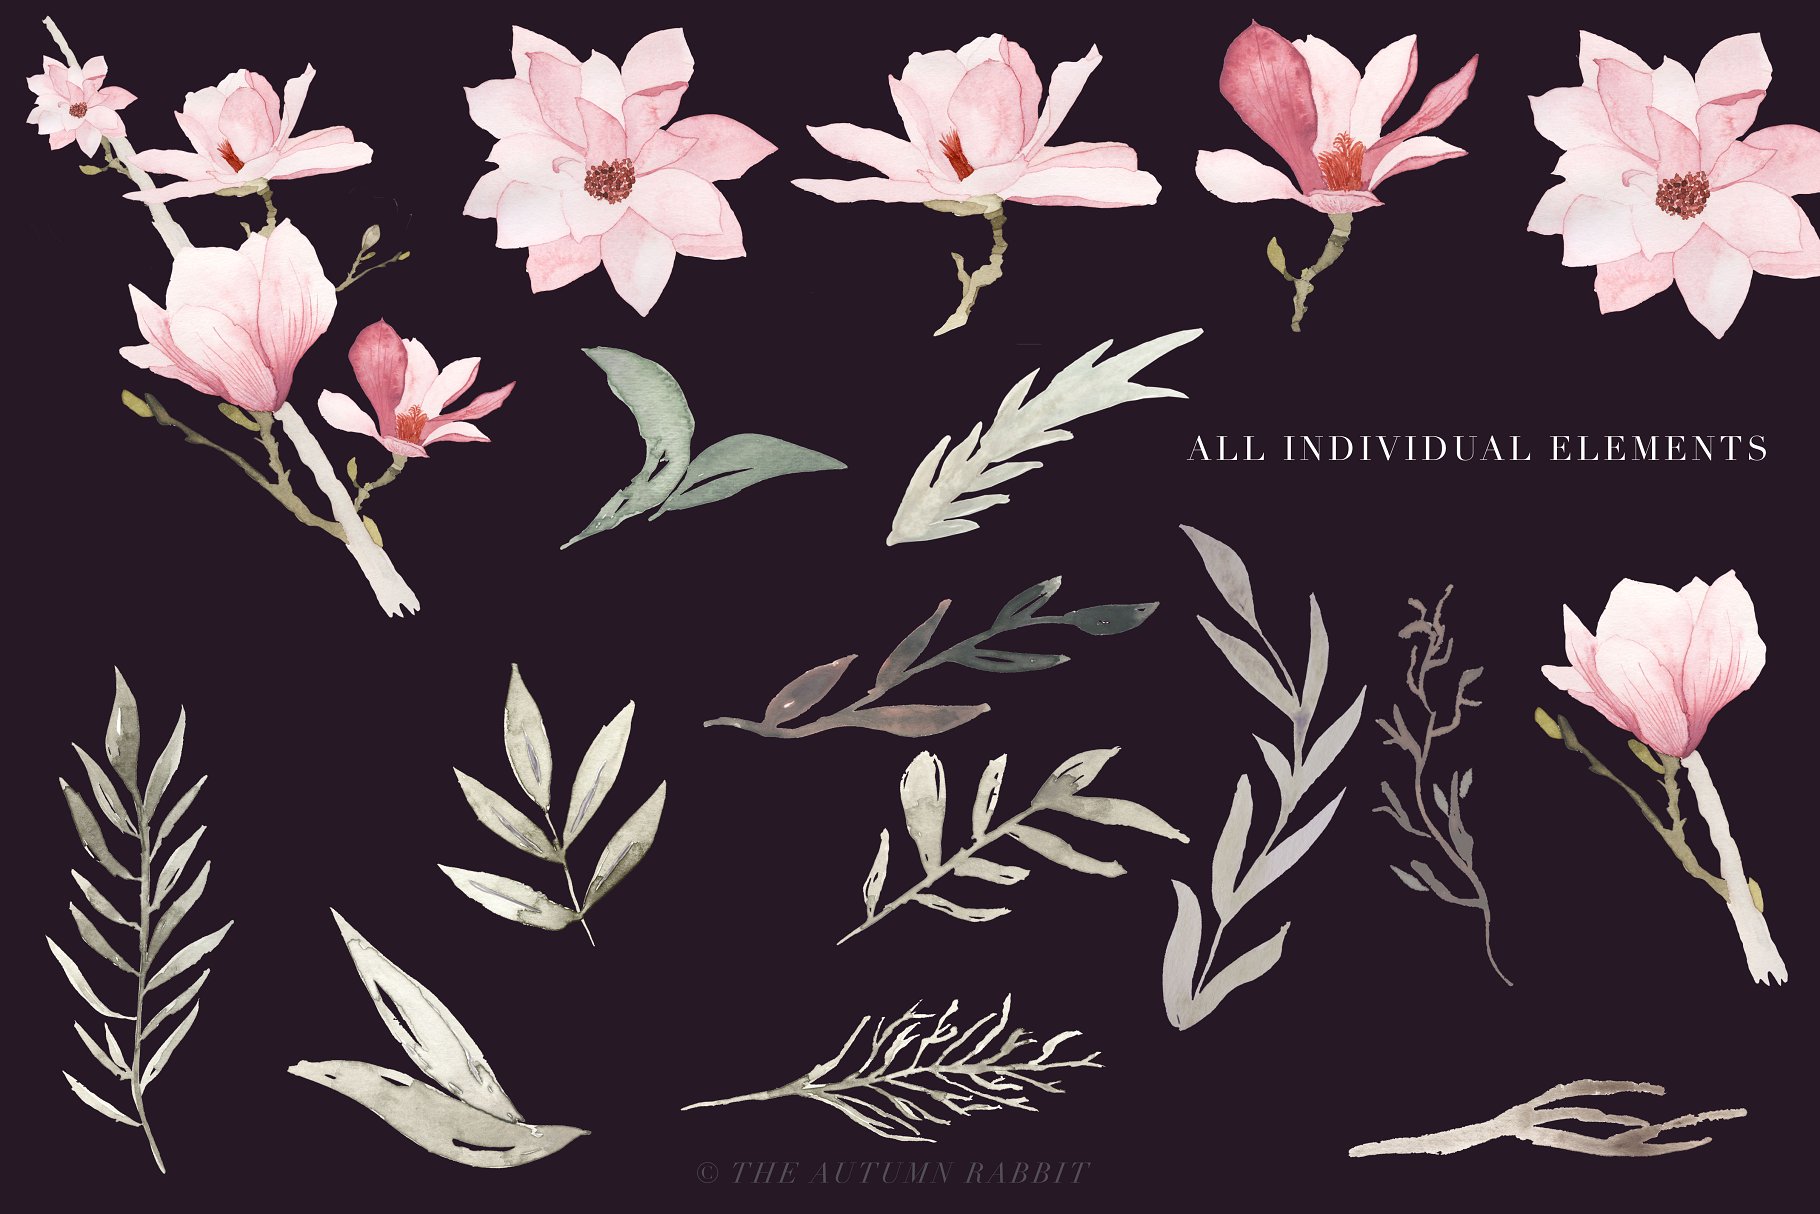 水彩玉兰花剪切画素材 Watercolor Magnolia Floral Clipart插图(3)